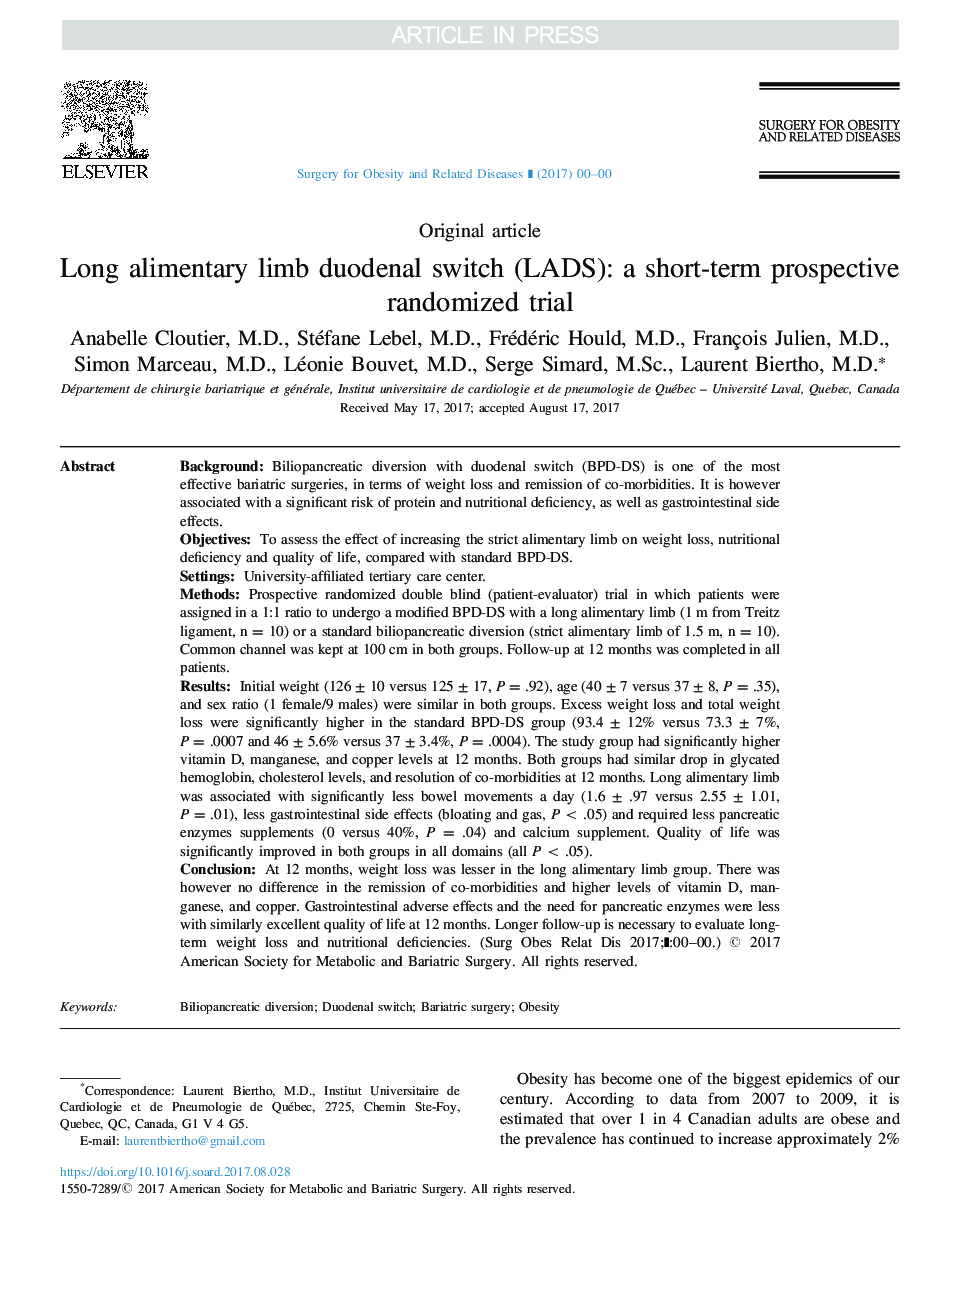 Long alimentary limb duodenal switch (LADS): a short-term prospective randomized trial